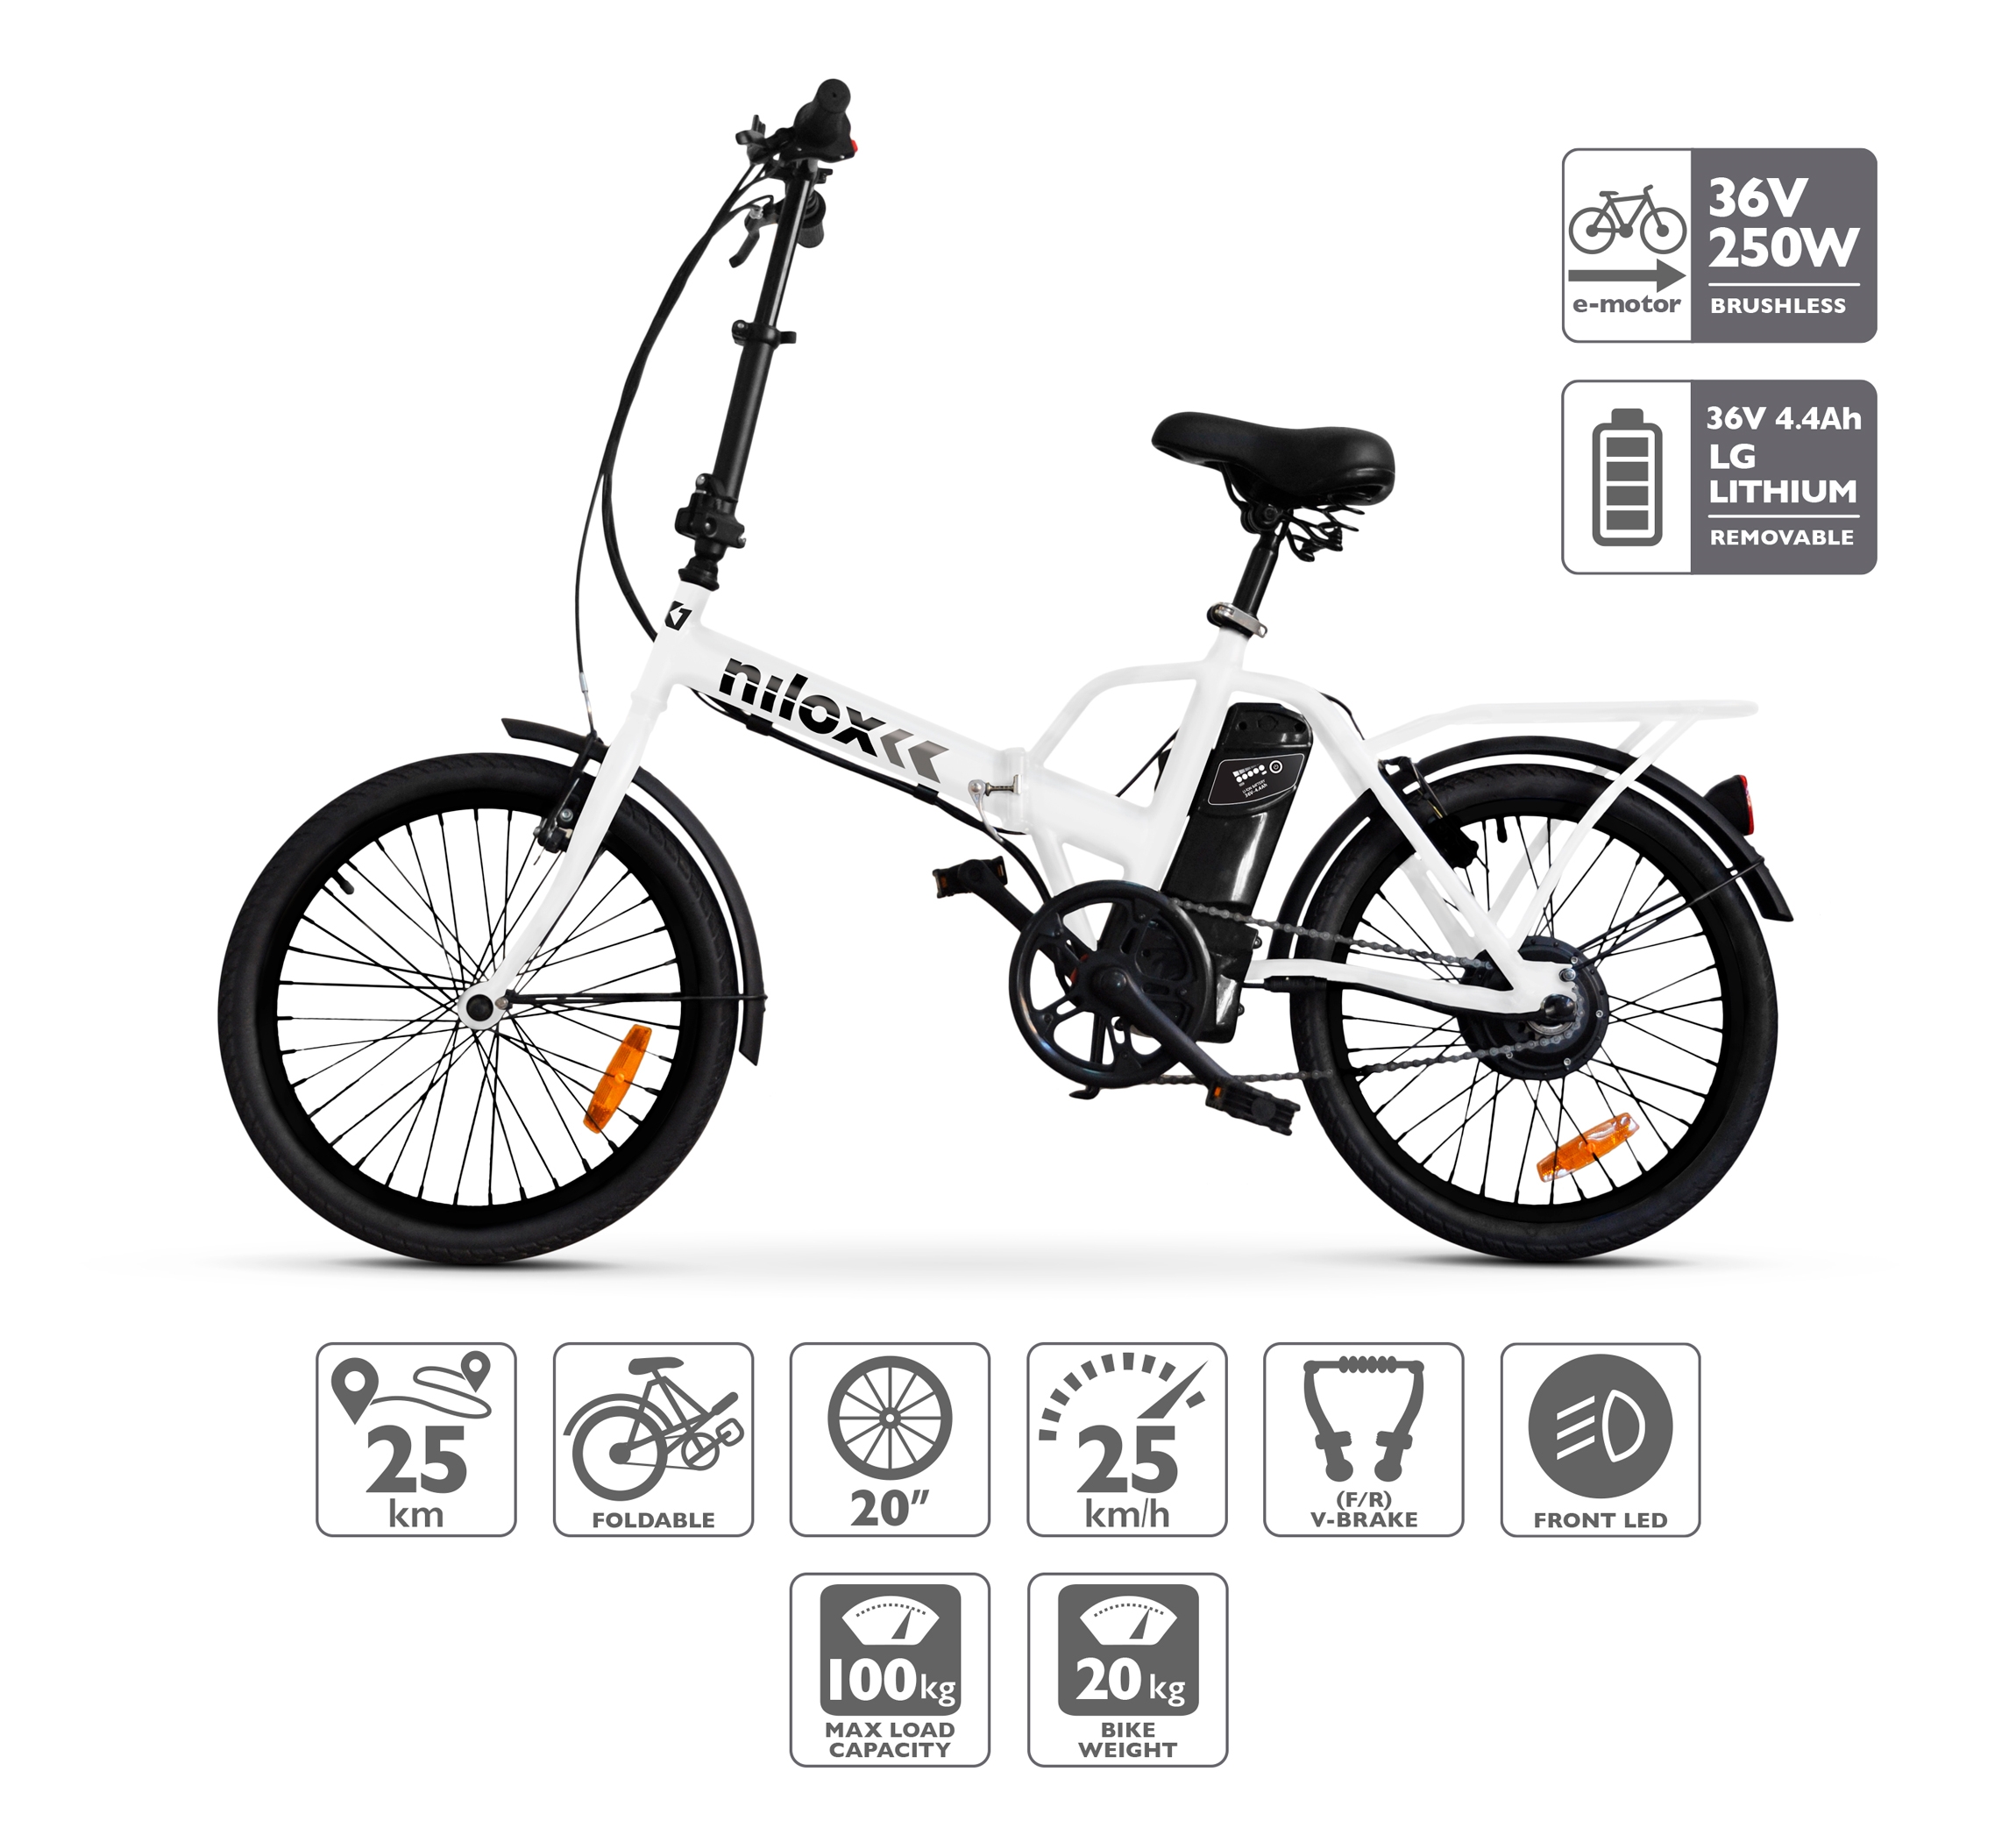 Recientemente Ser recuperar Nilox Doc E-Bike X1 Bicicleta Electrica Plegable Blanca - Mundo Consumible  Tienda Informática Juguetería Artes Graficas